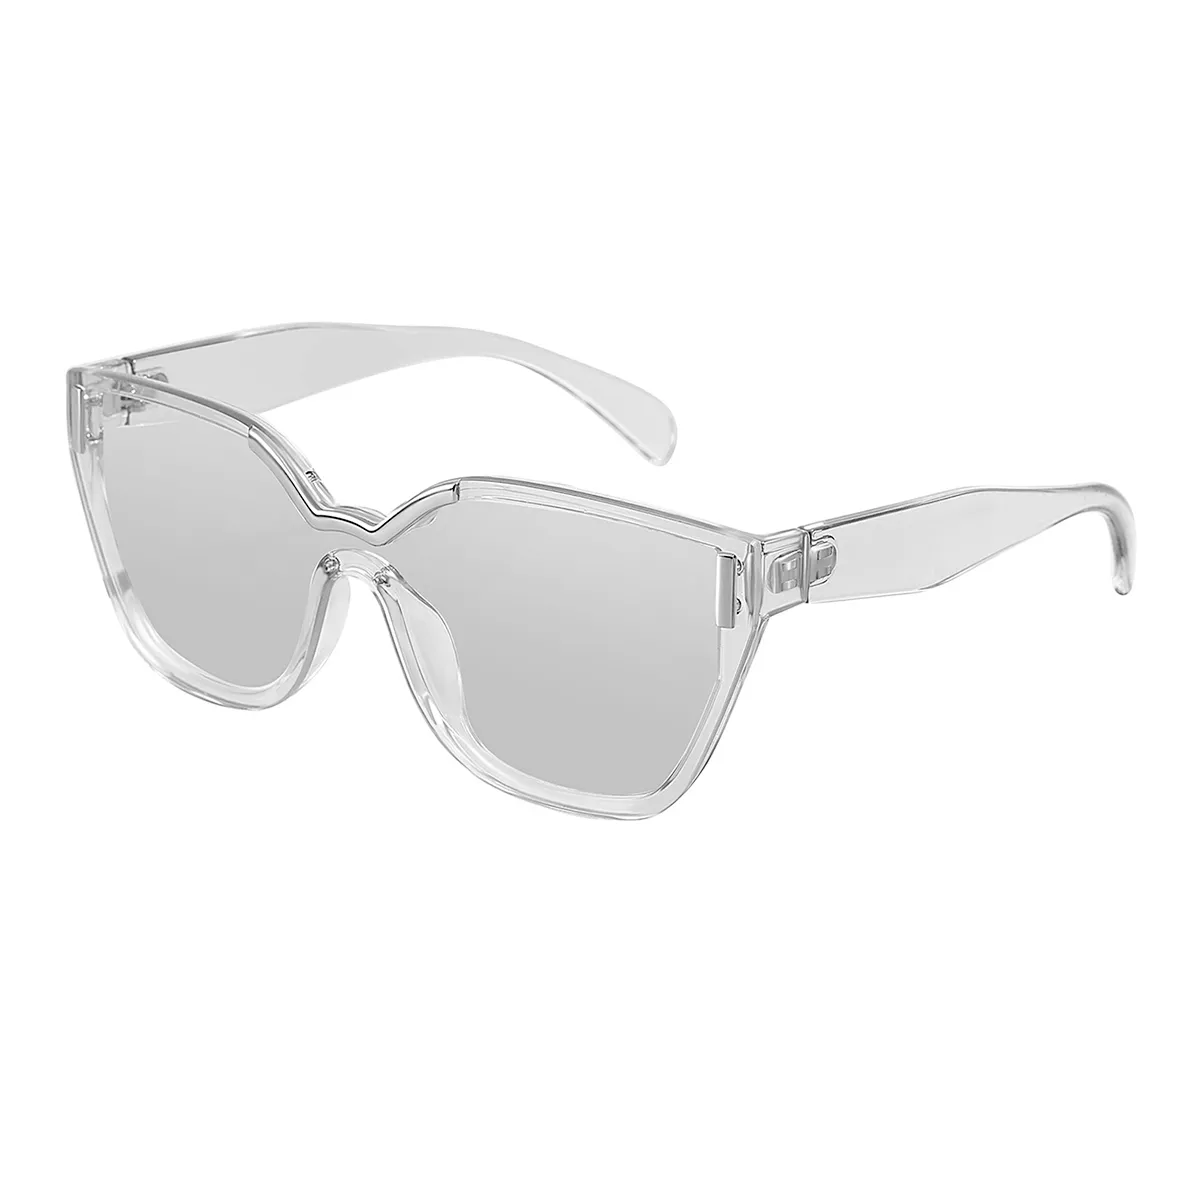 Wanda - Geometric Gray Sunglasses for Women